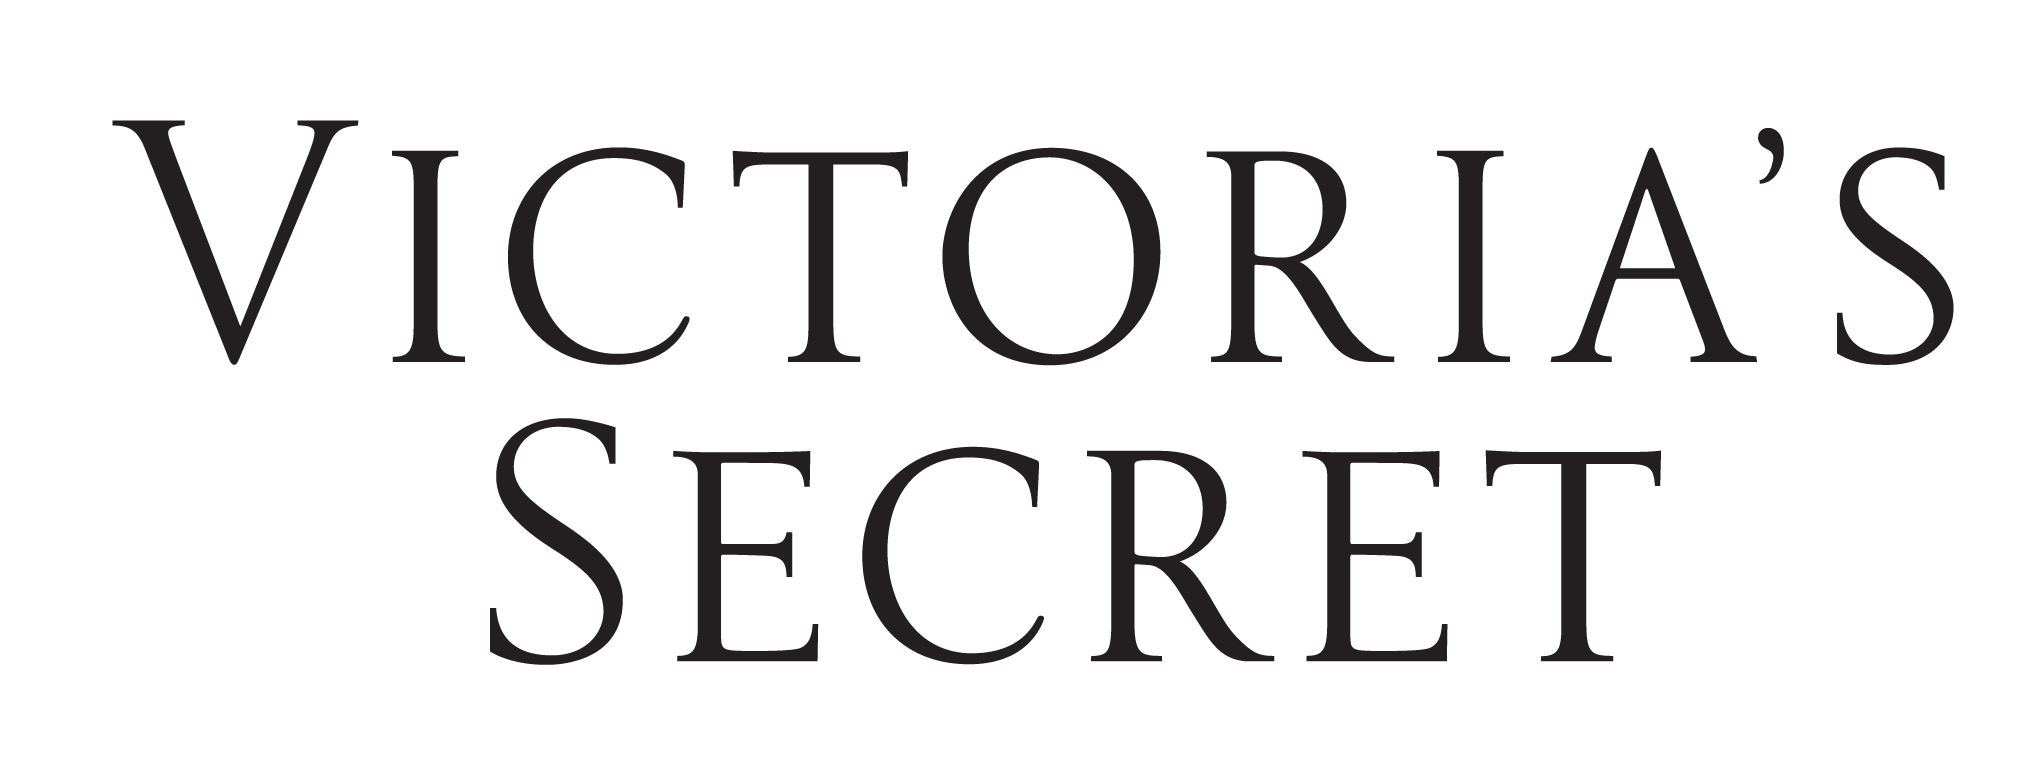 Victorias-Secret Logo.jpg